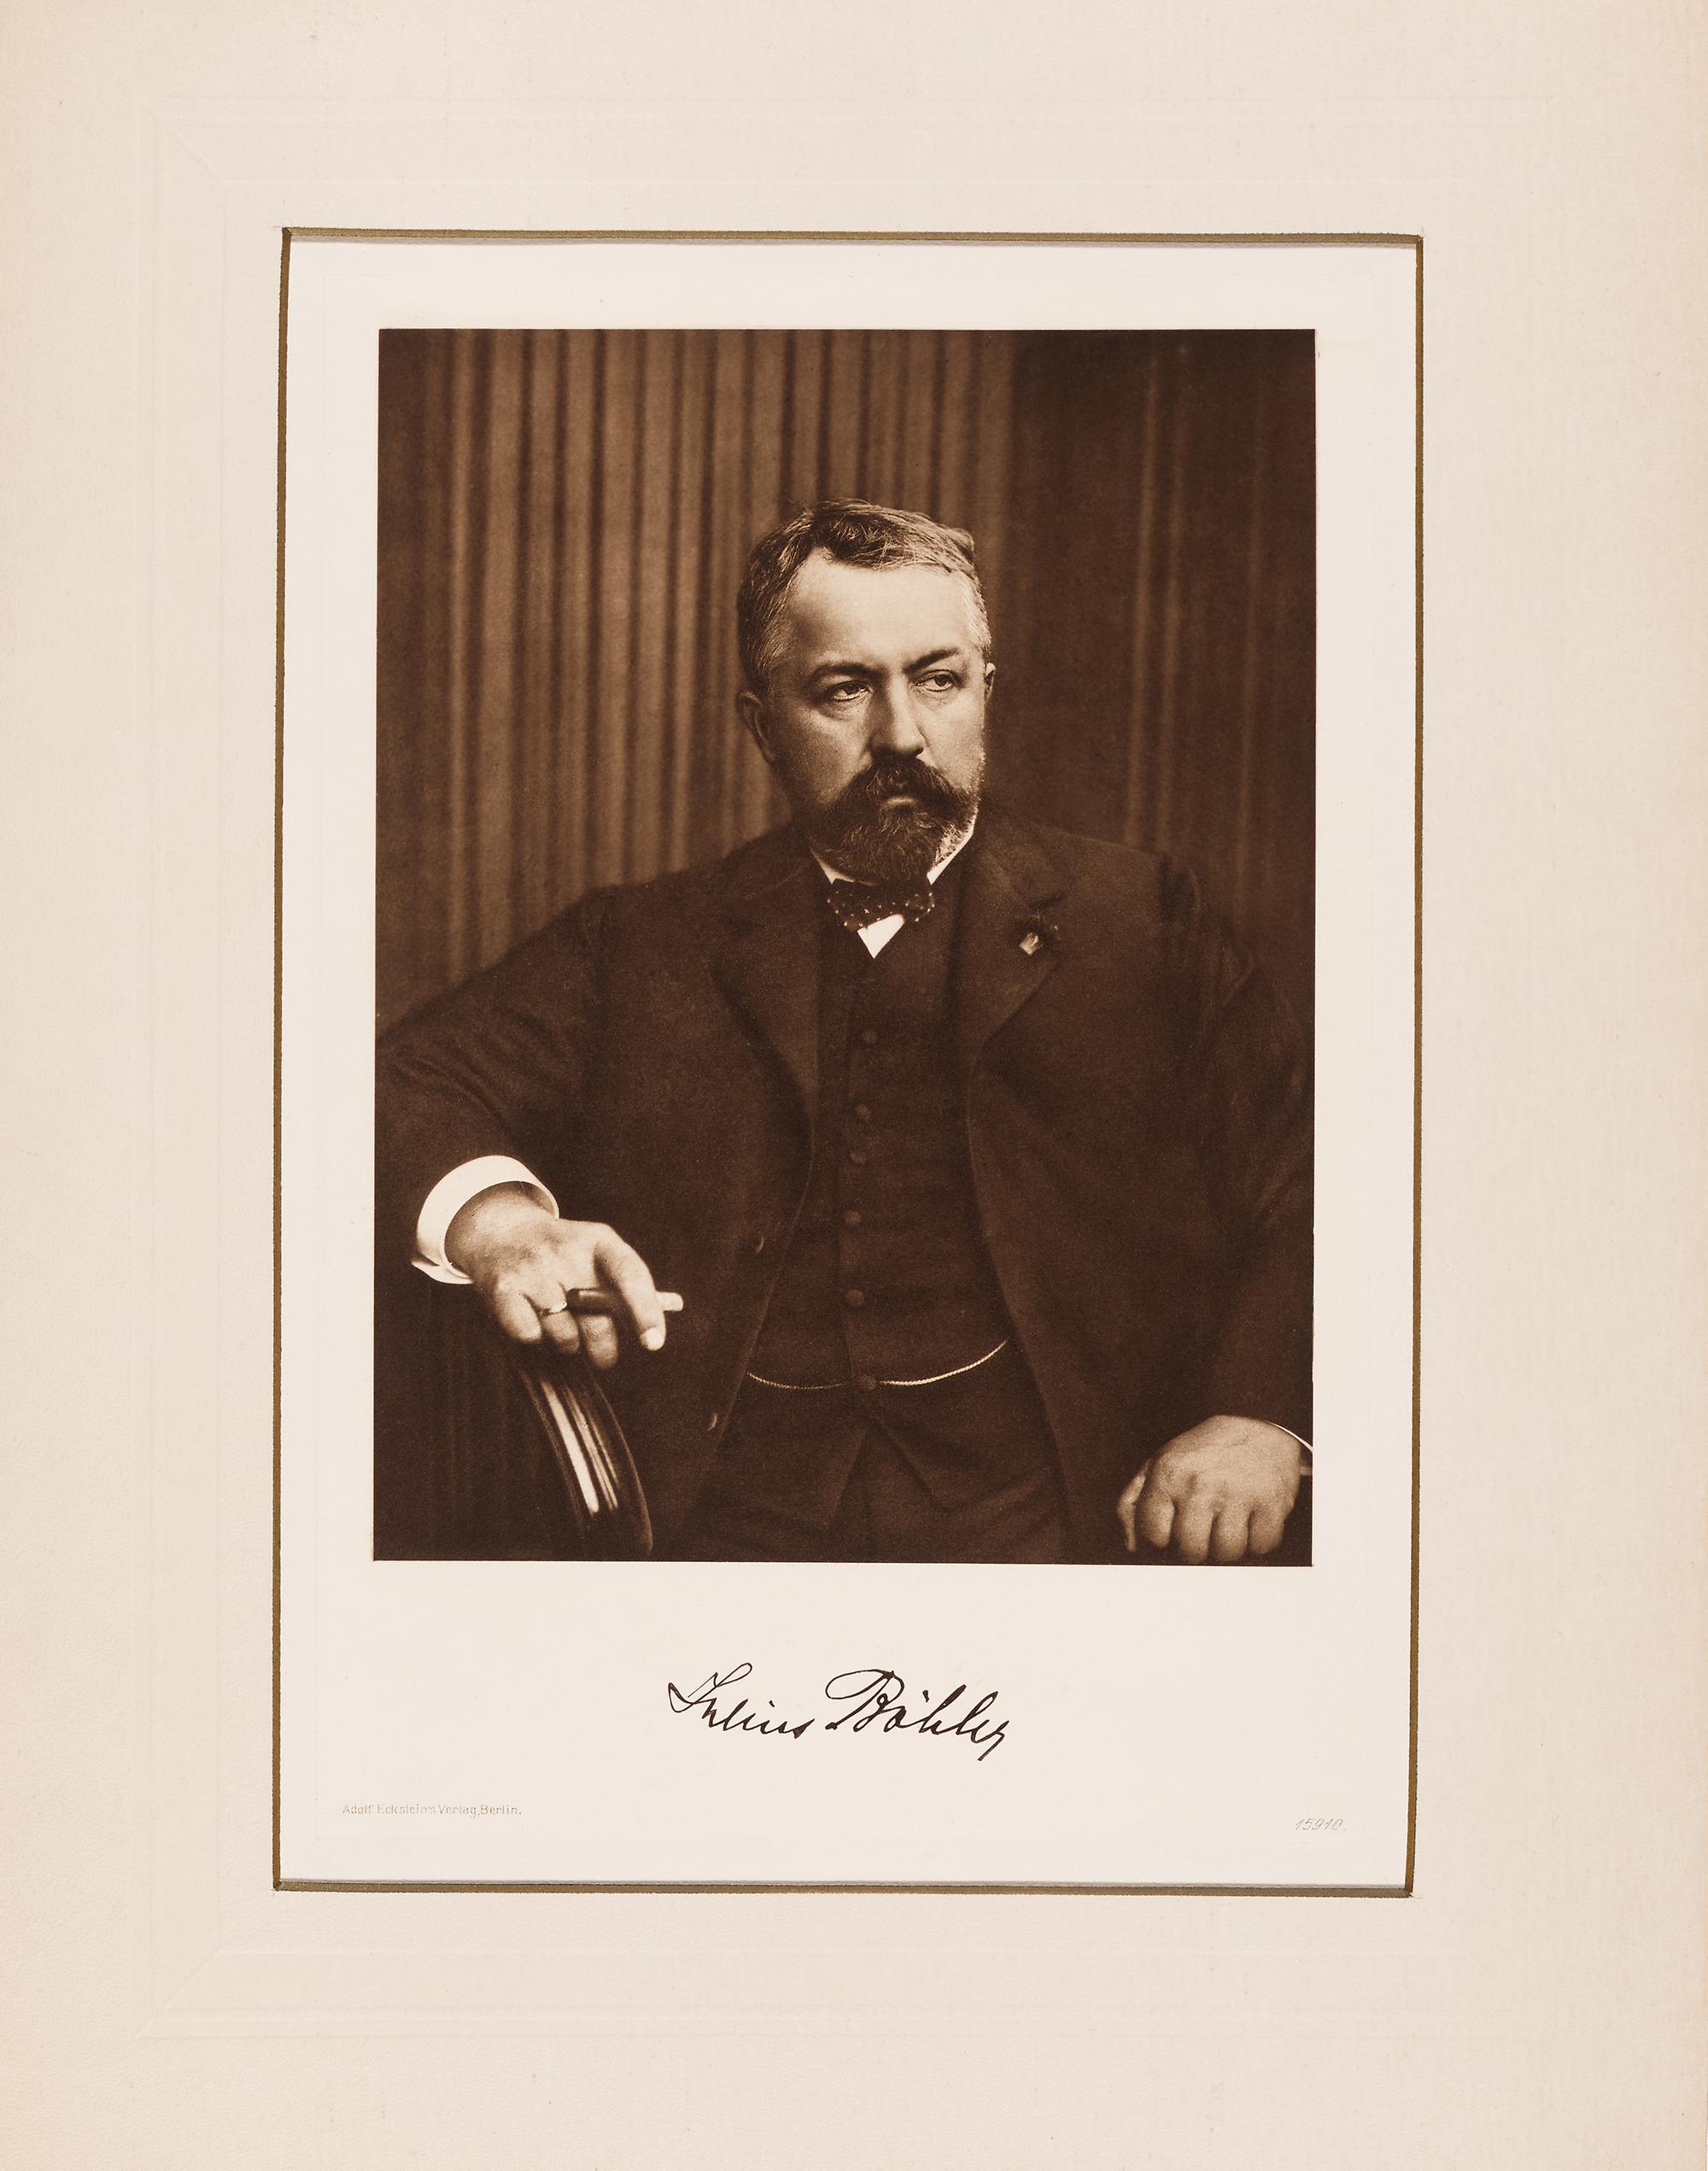 Der Kunsthändler Julius Böhler, um 1910